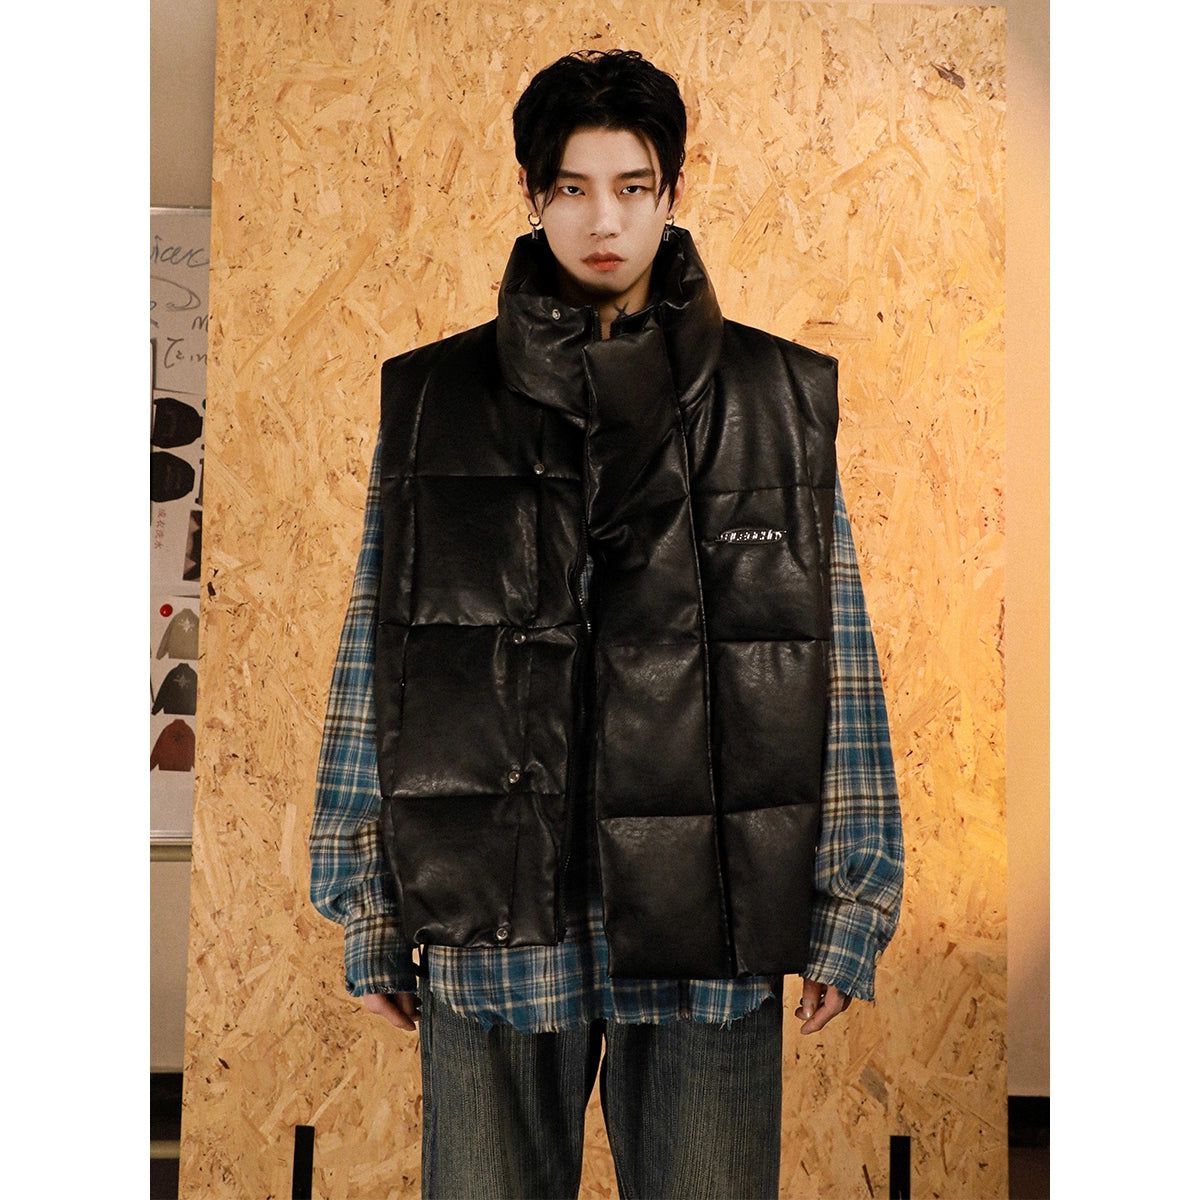 Sleek High Collar Padded Vest Korean Street Fashion Vest By Mr Nearly Shop Online at OH Vault